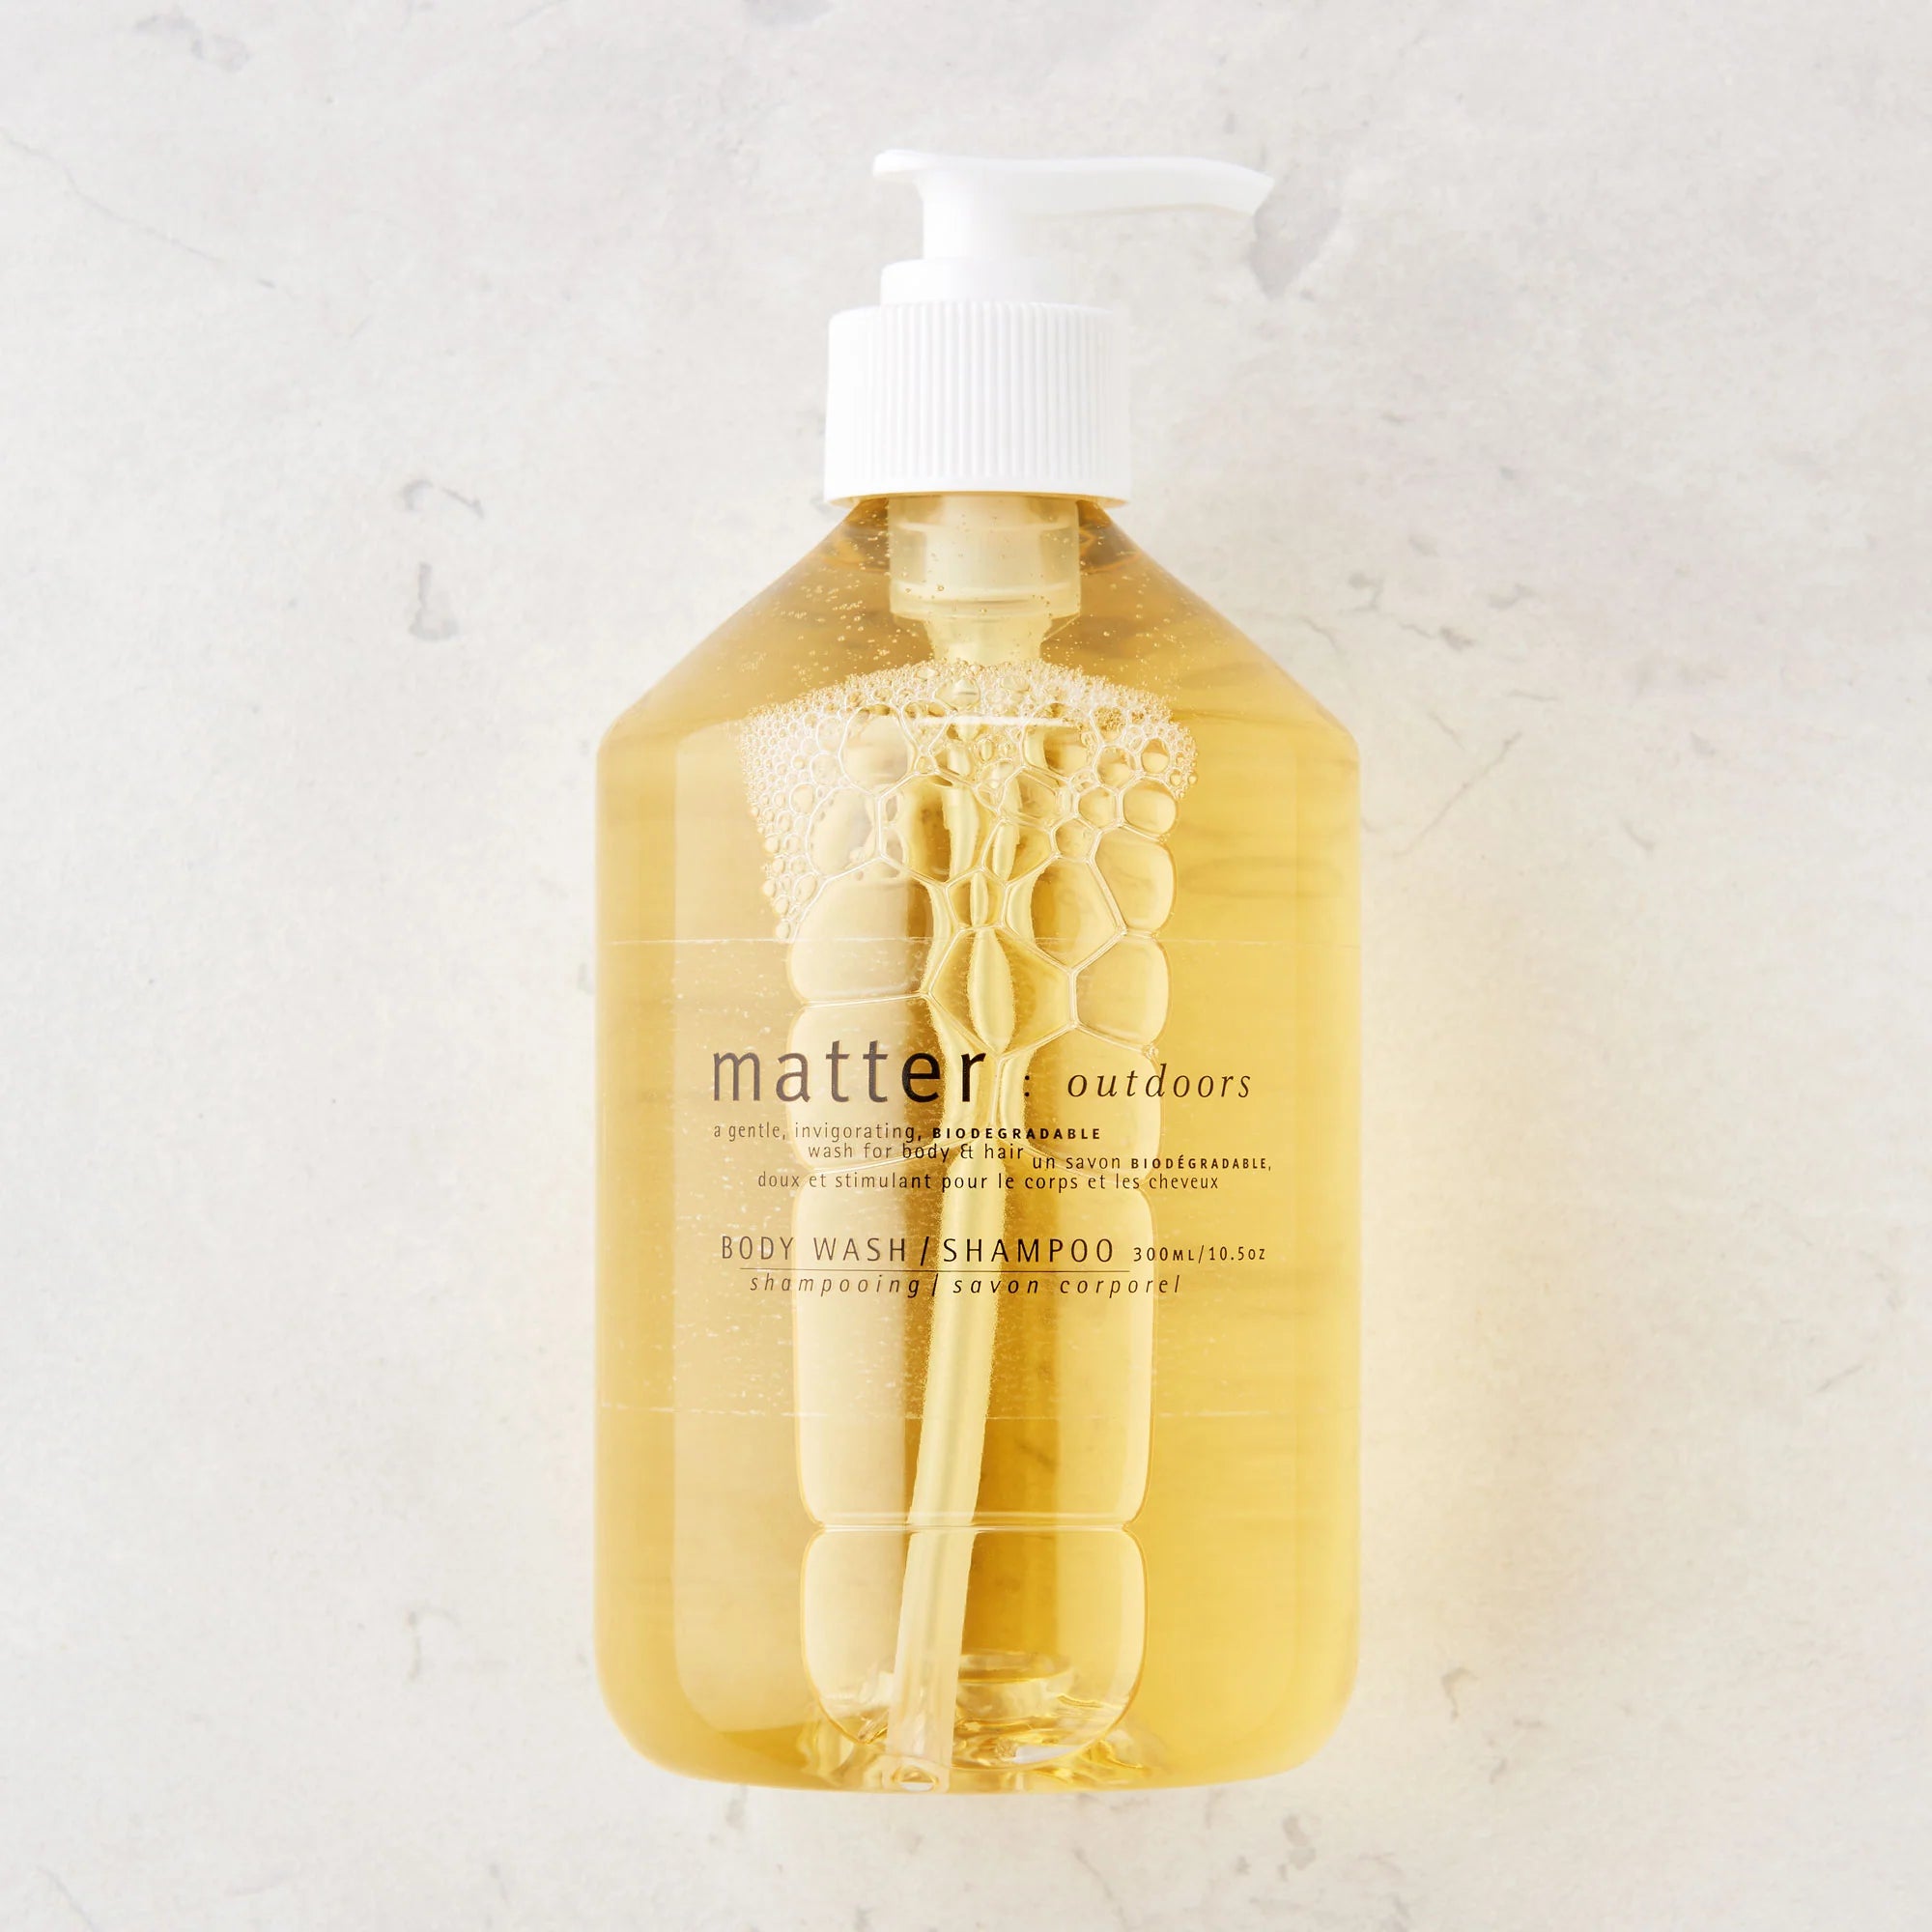 Matter Company - Outdoors Body Wash/Shampoo